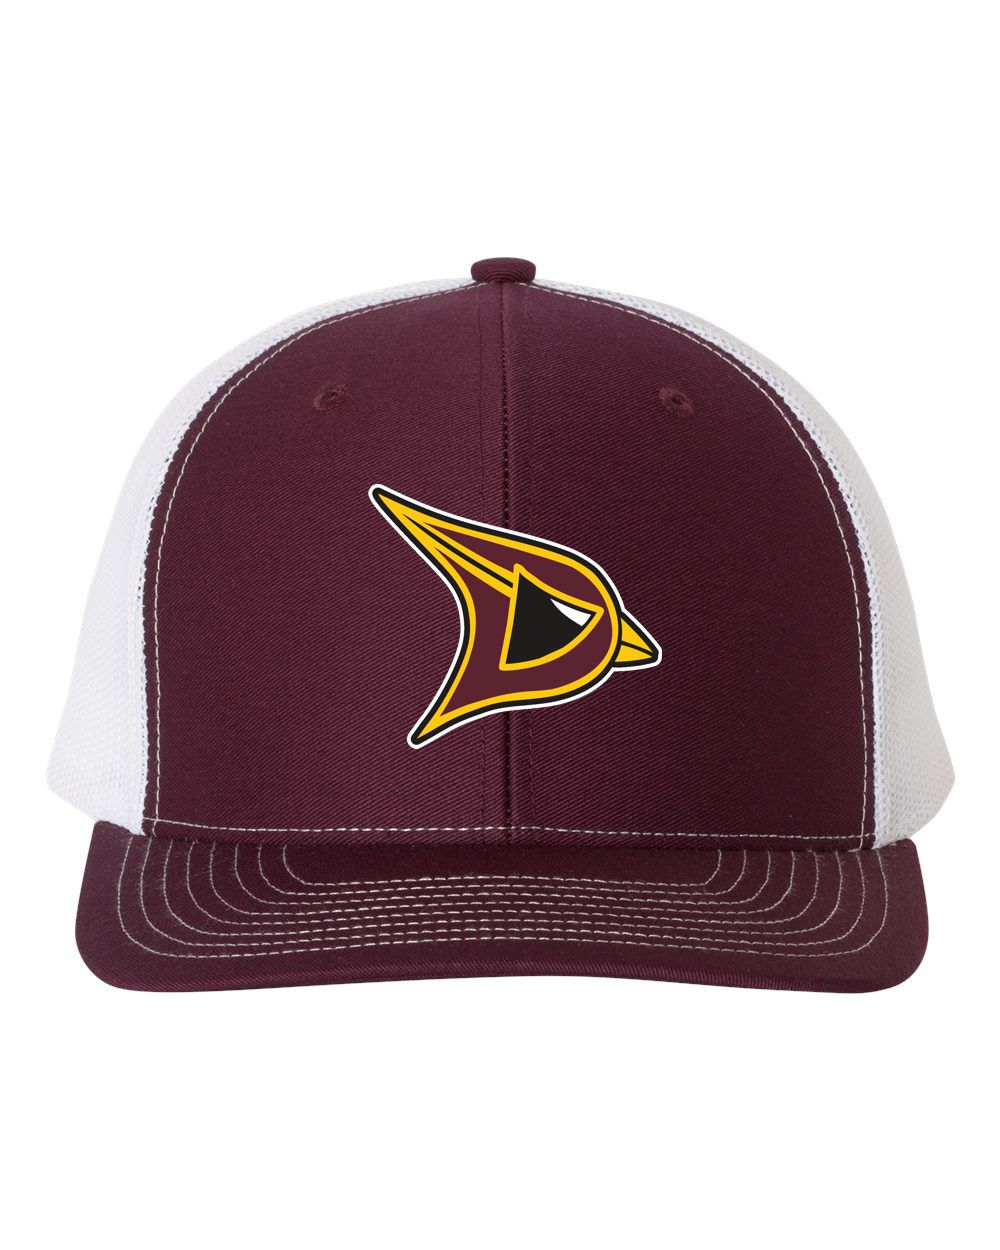 Davison Cardinals Embroidery Snap Back Hat